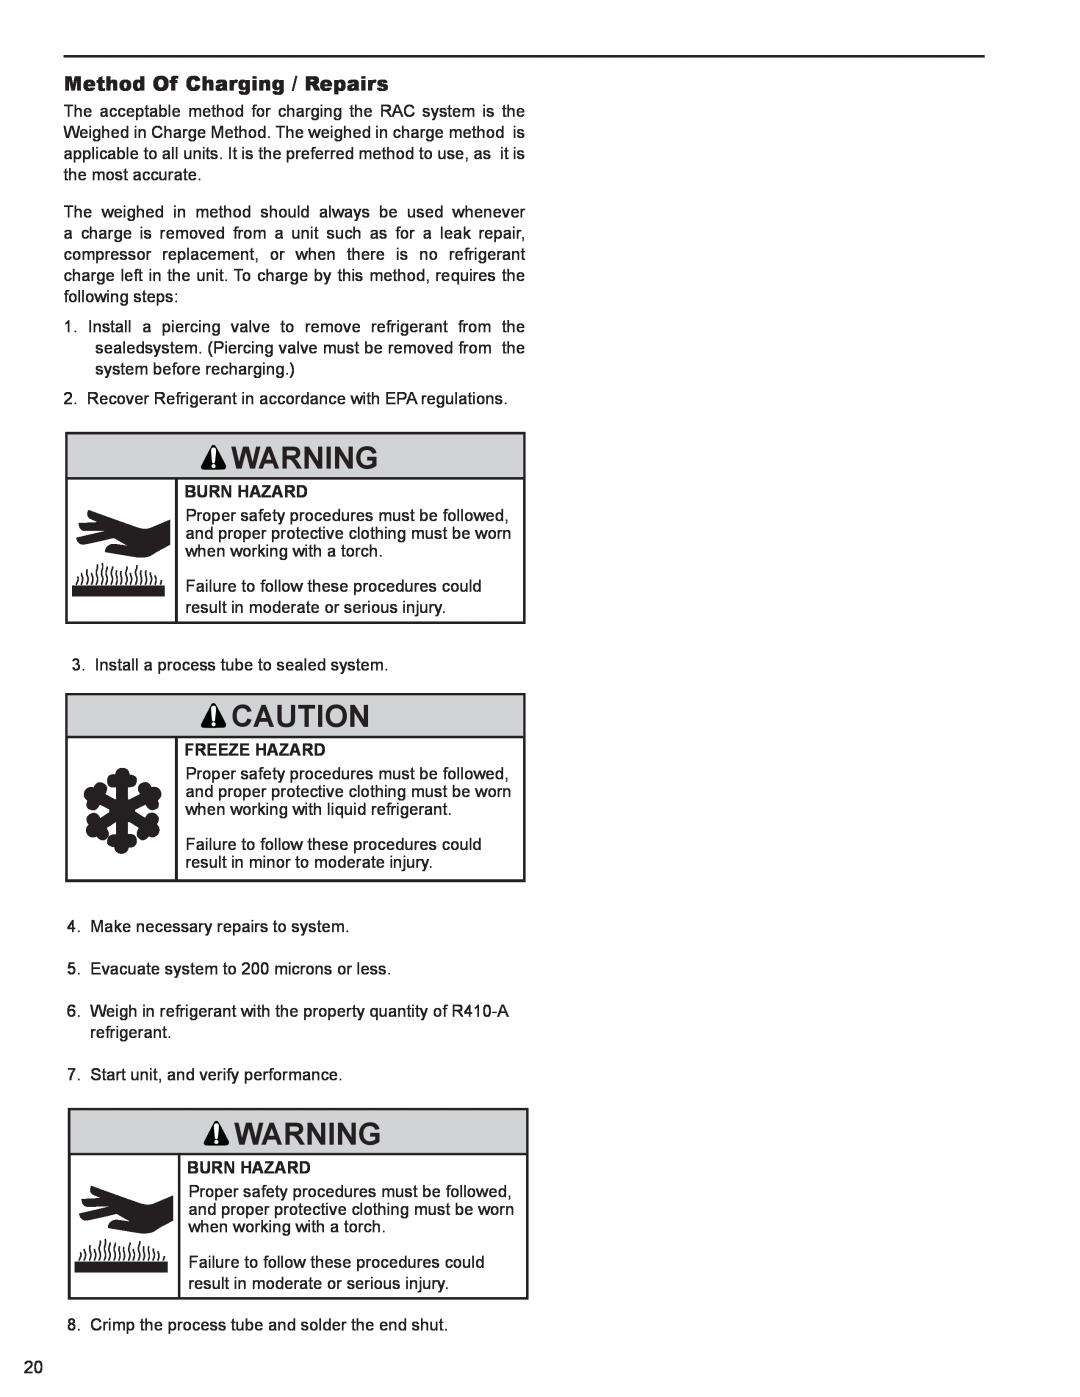 Friedrich R-410A service manual Method Of Charging / Repairs, Burn Hazard, Freeze Hazard 